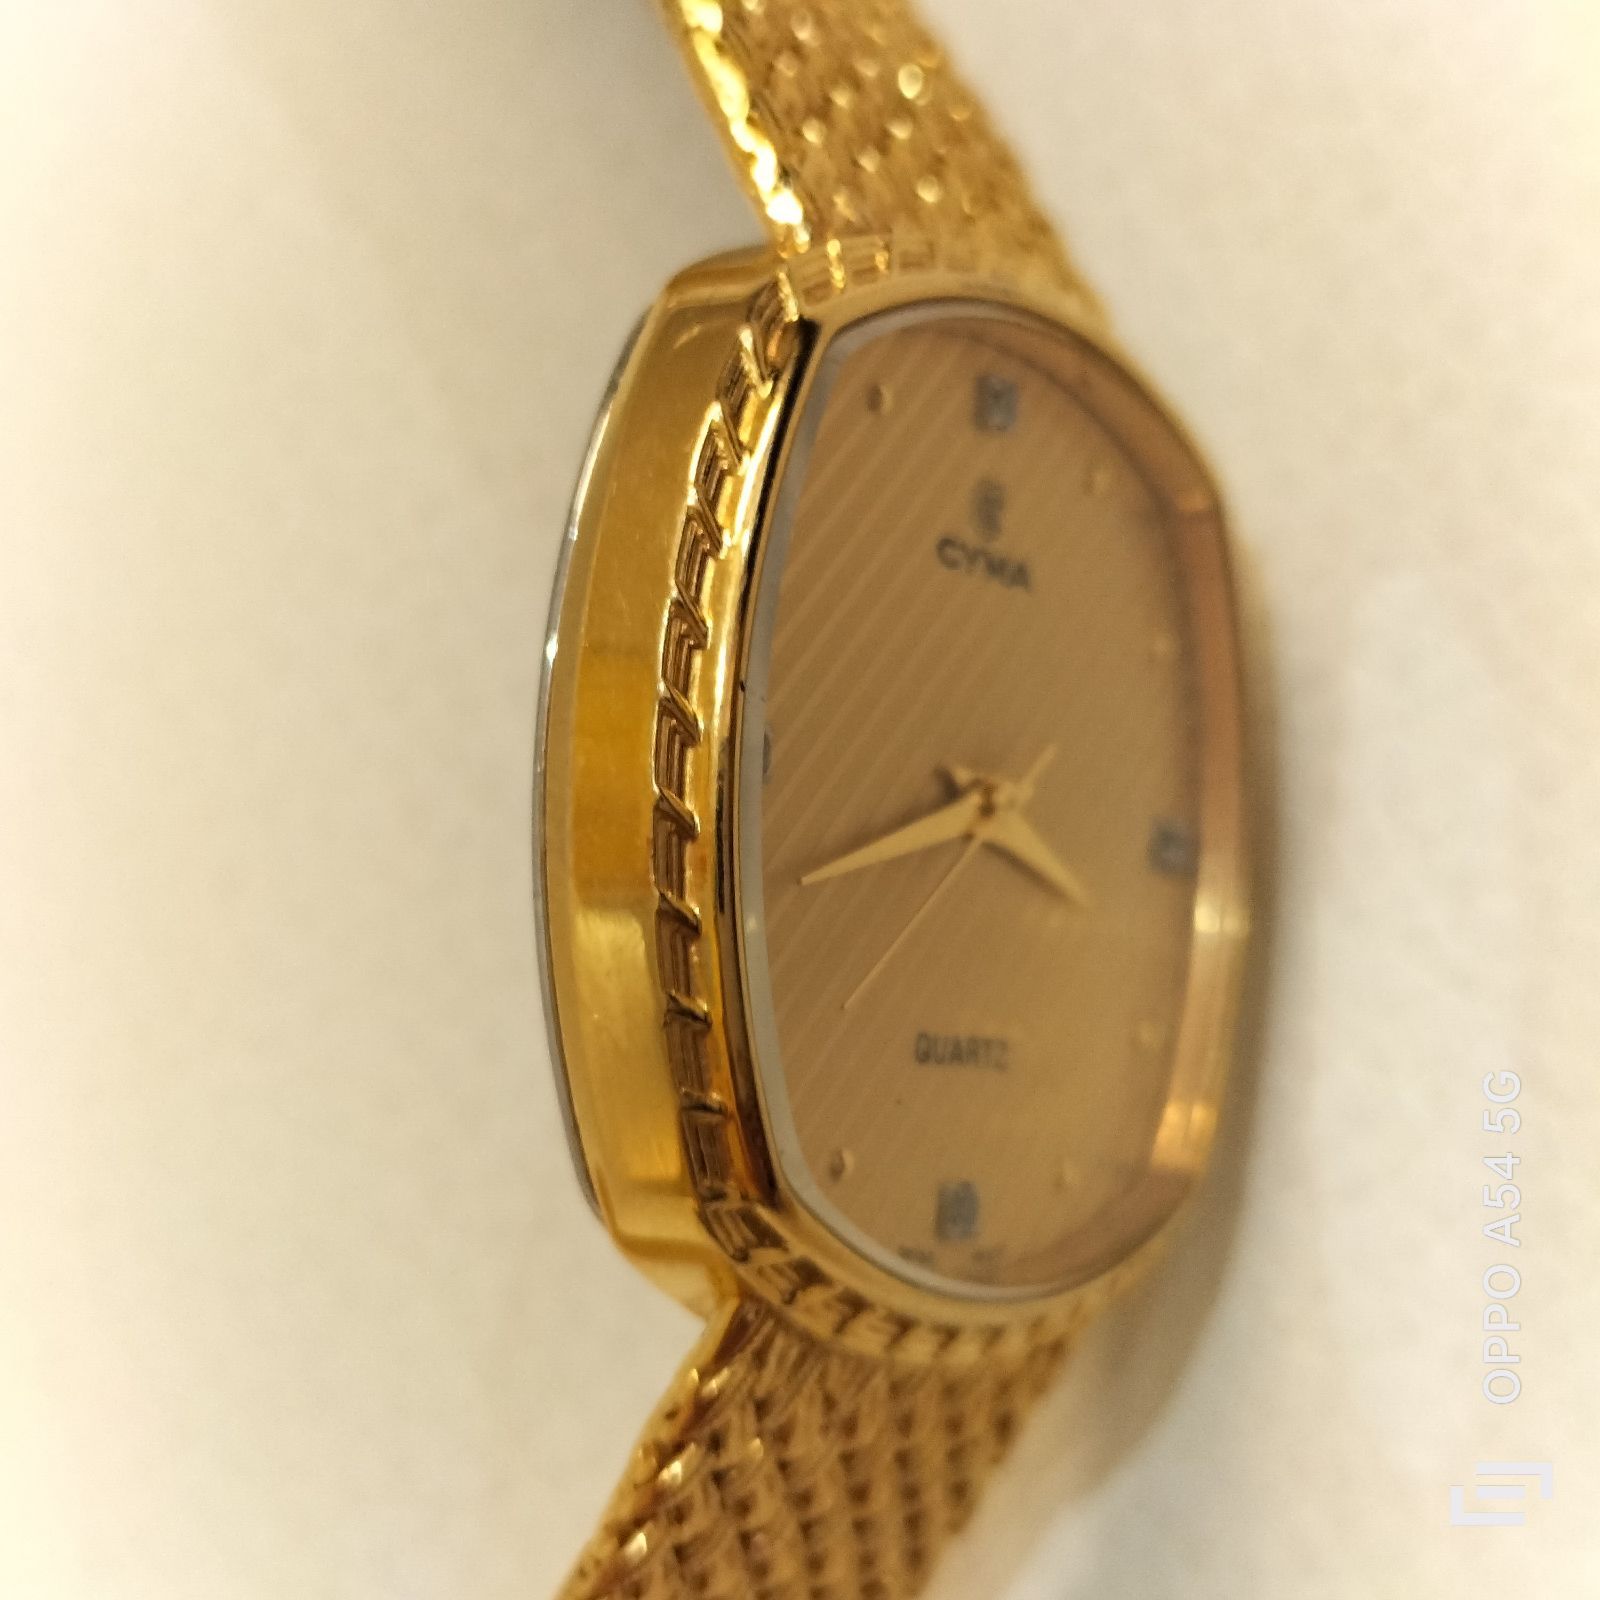 CYMA 腕時計 ゴールド 4P 604SPメンズ - 腕時計(アナログ)